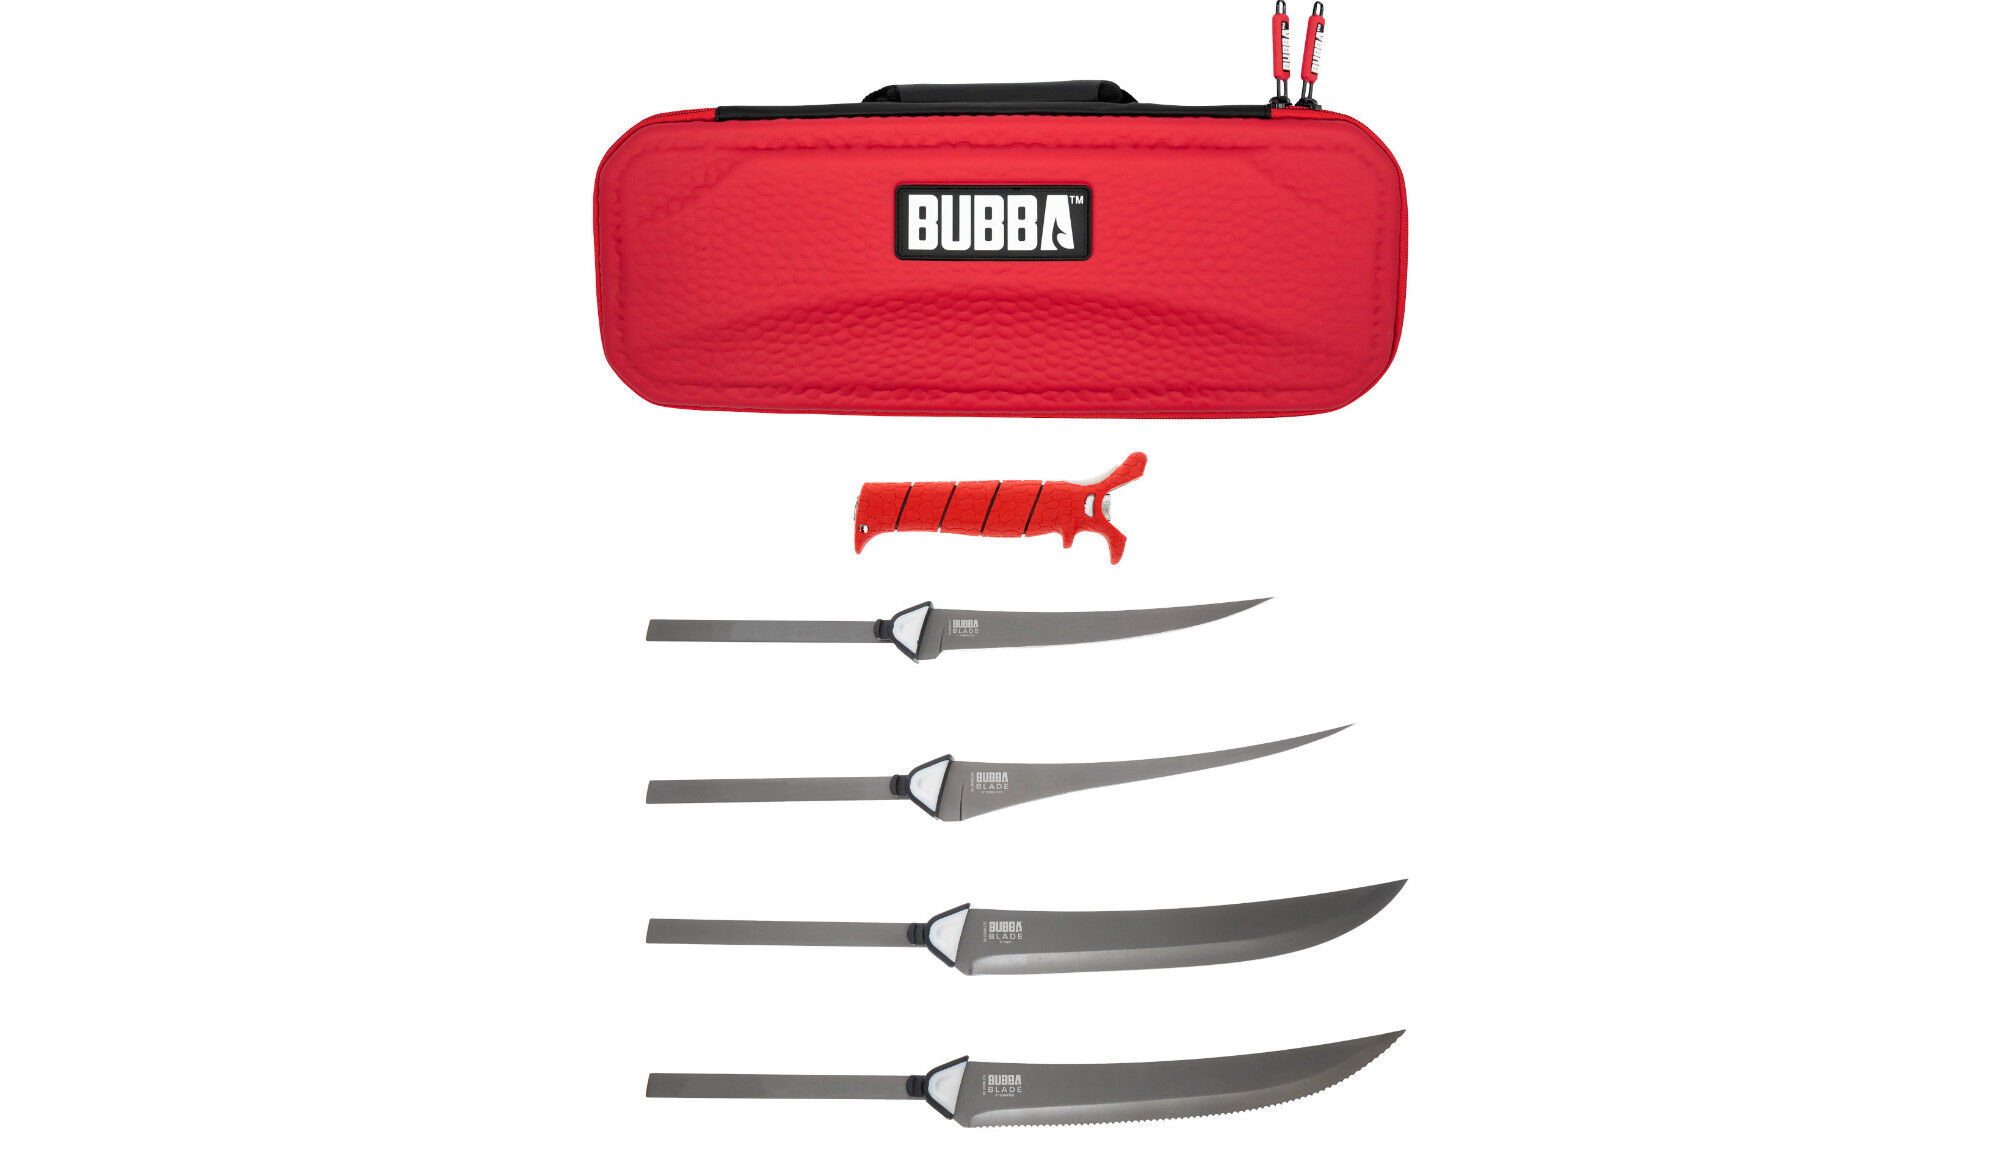 Bubba Knife, Pliers, Shear Combo